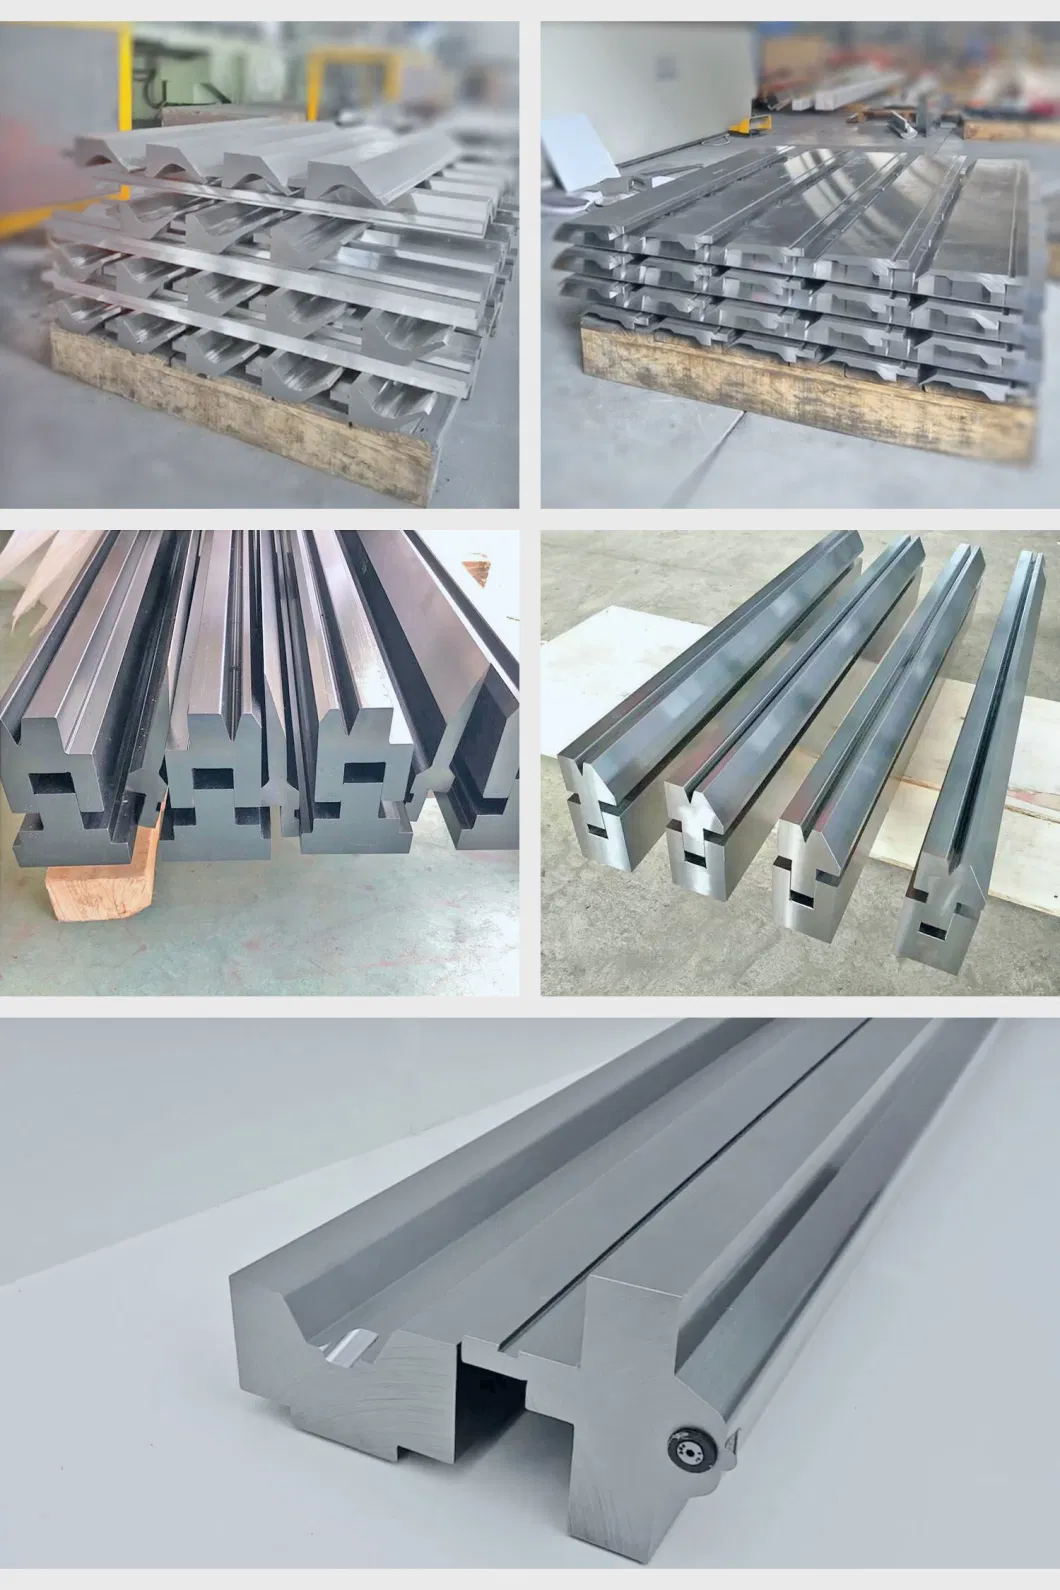 Strong Hardness Press Brake Mold Bending Tools Sheet Metal Press Tools Made in China